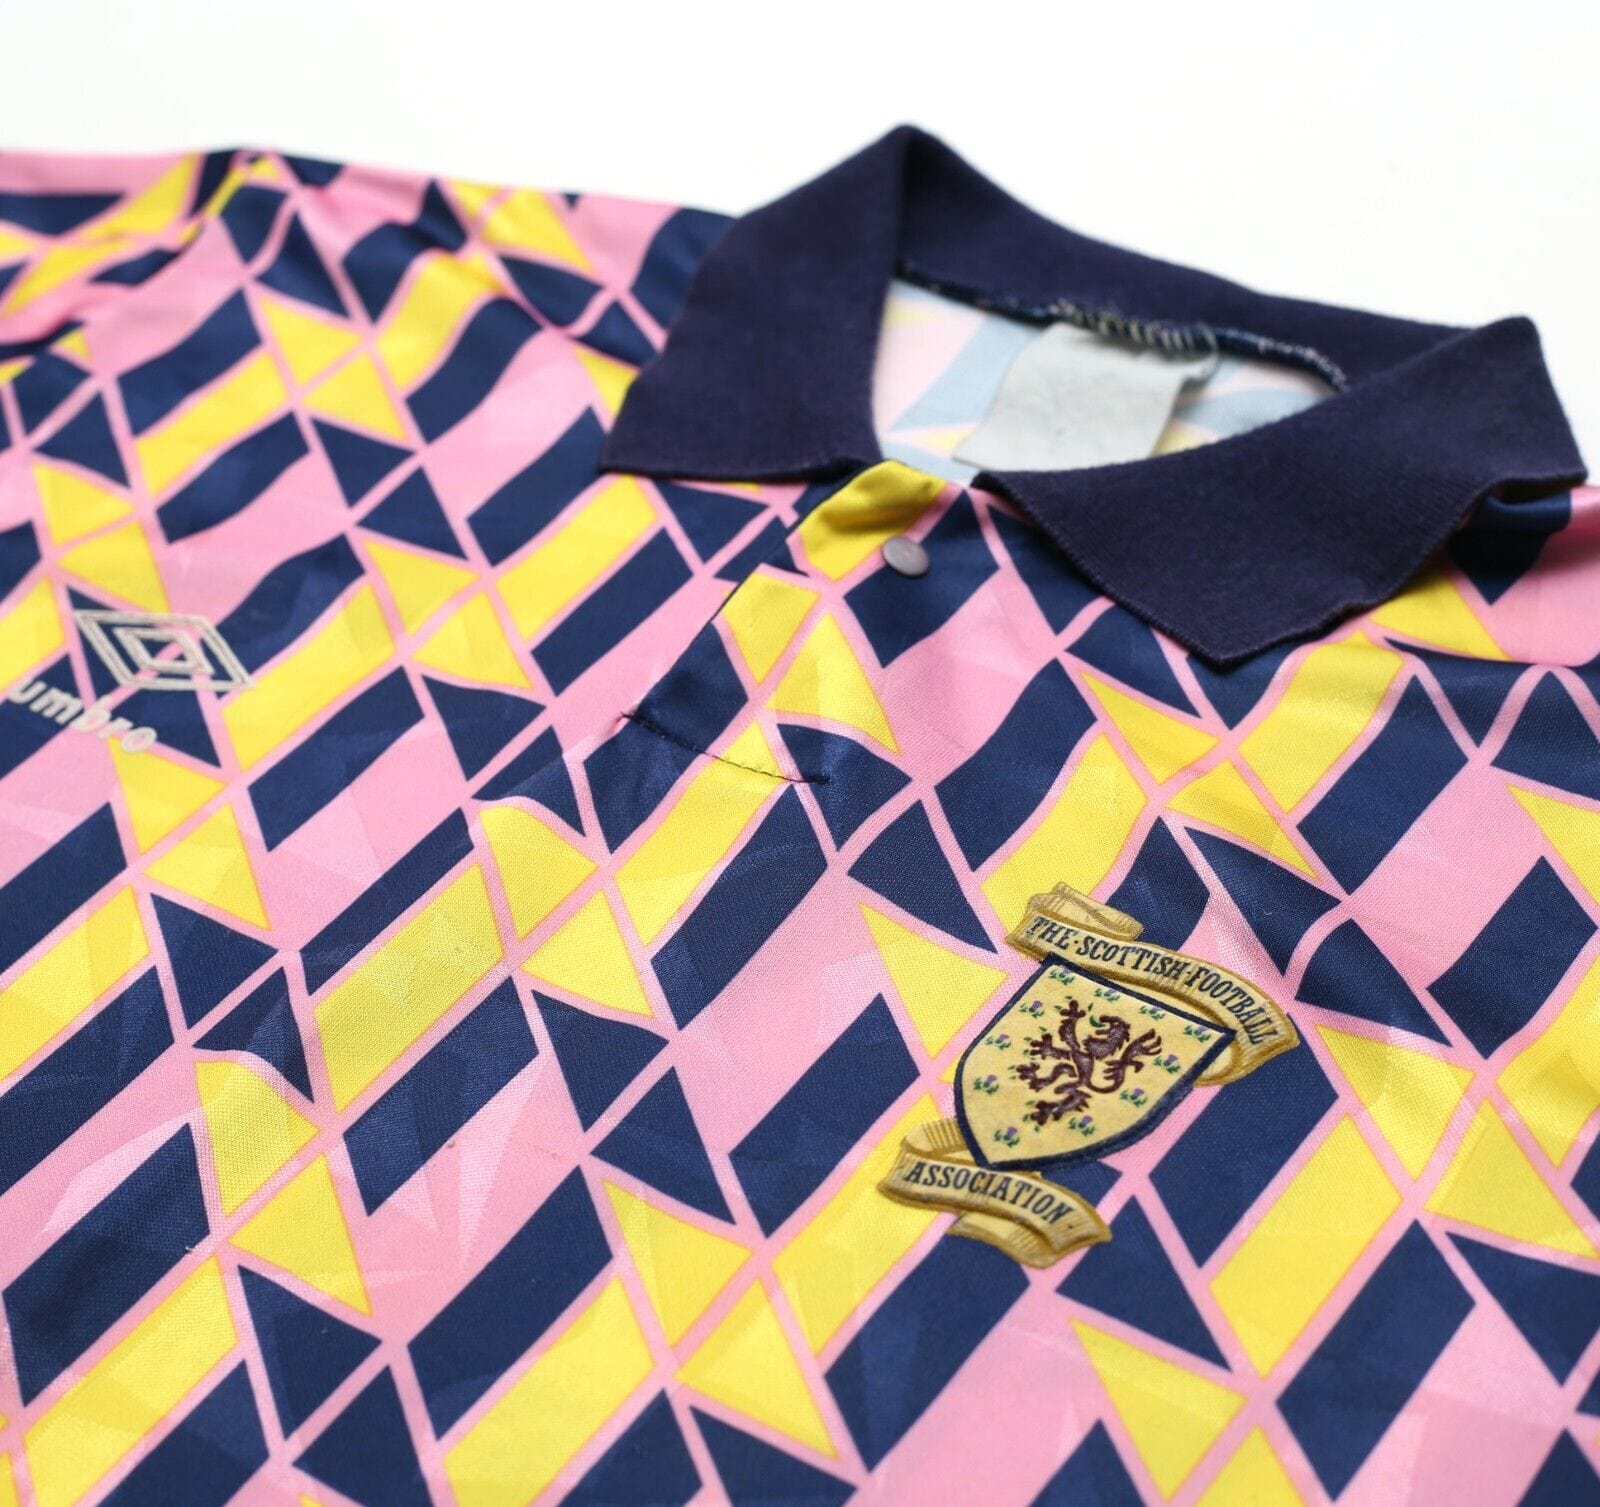 1988/90 SCOTLAND Vintage Original Umbro Football Leisure Shirt (M)